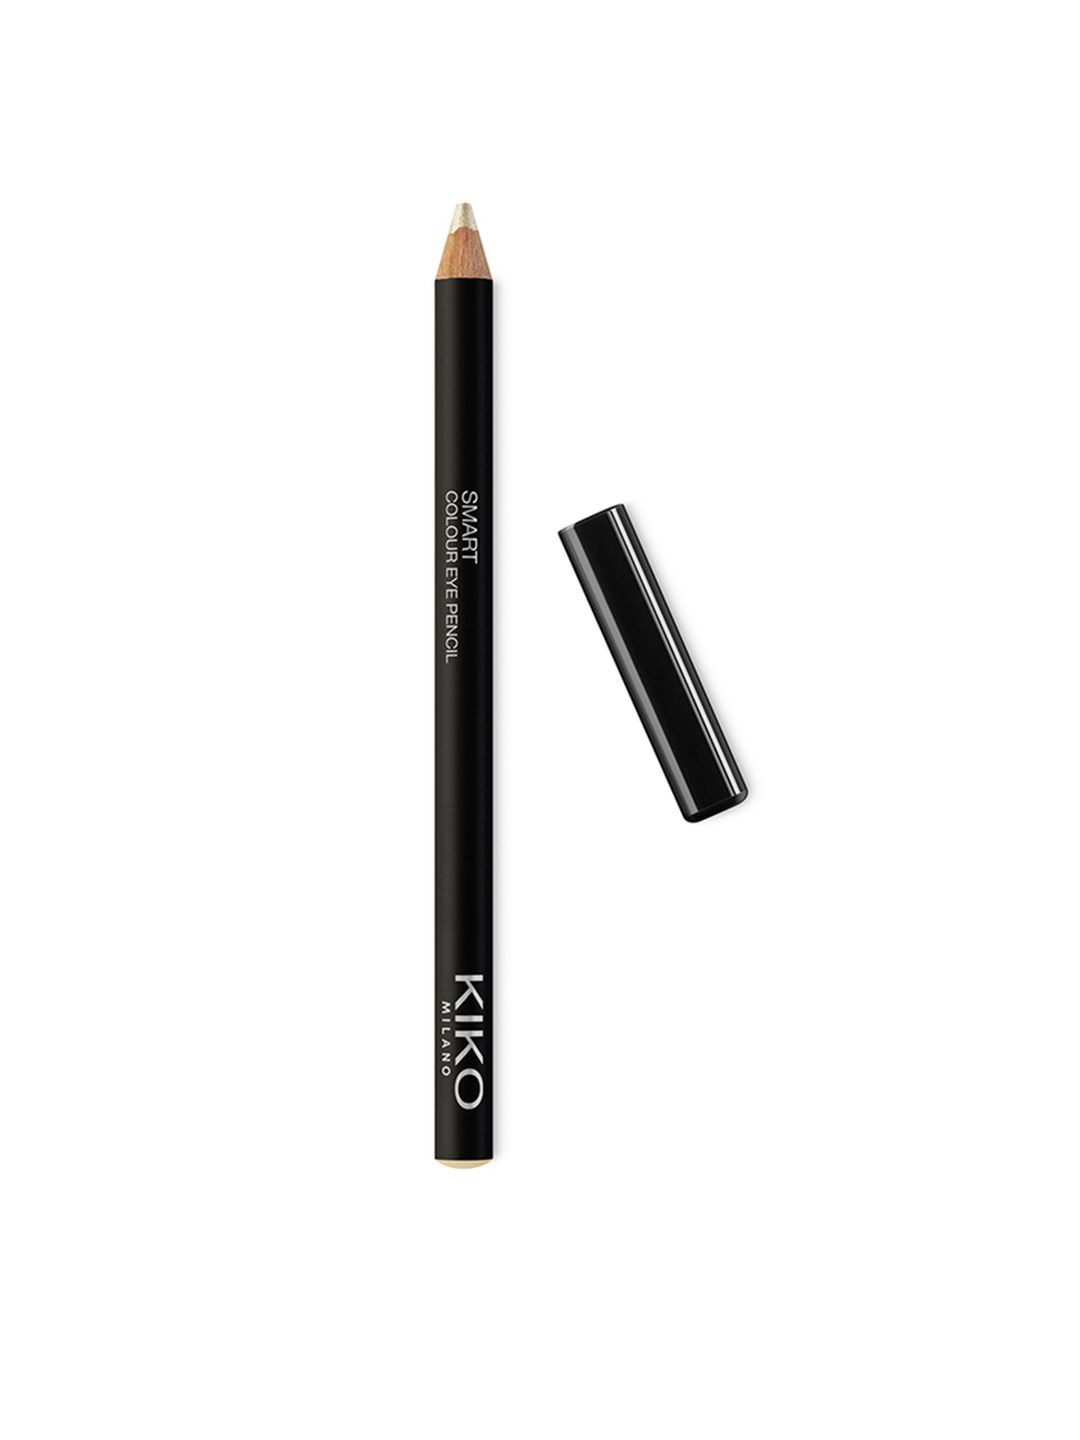 KIKO MILANO Smart Colour Eye Pencil - Pearly Gold 01 Price in India